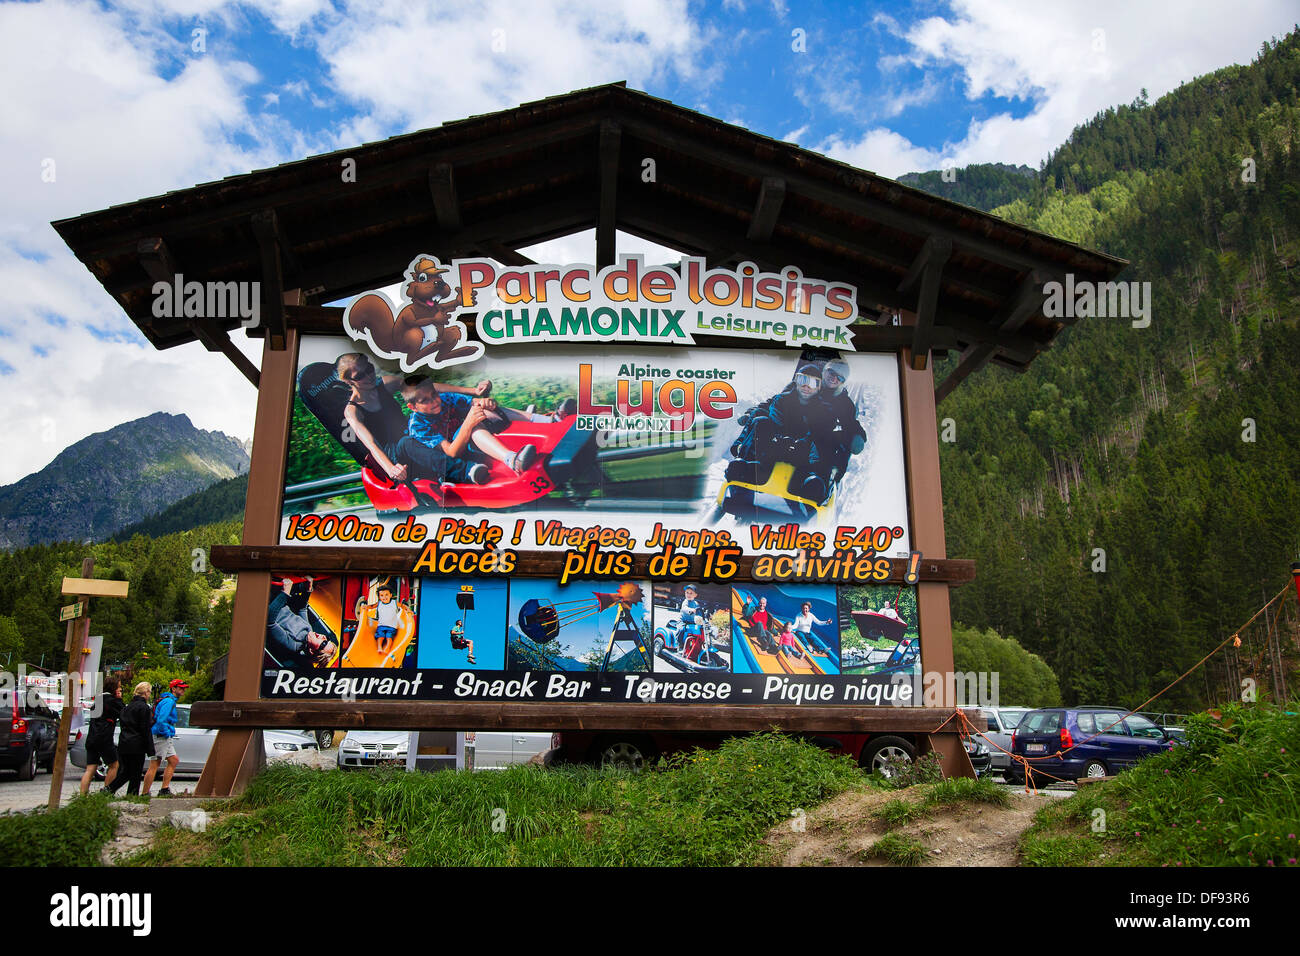 Ingresso segno per il Parc de loisirs, Chamonix Leisure Park, Chamonix, sulle Alpi francesi Foto Stock